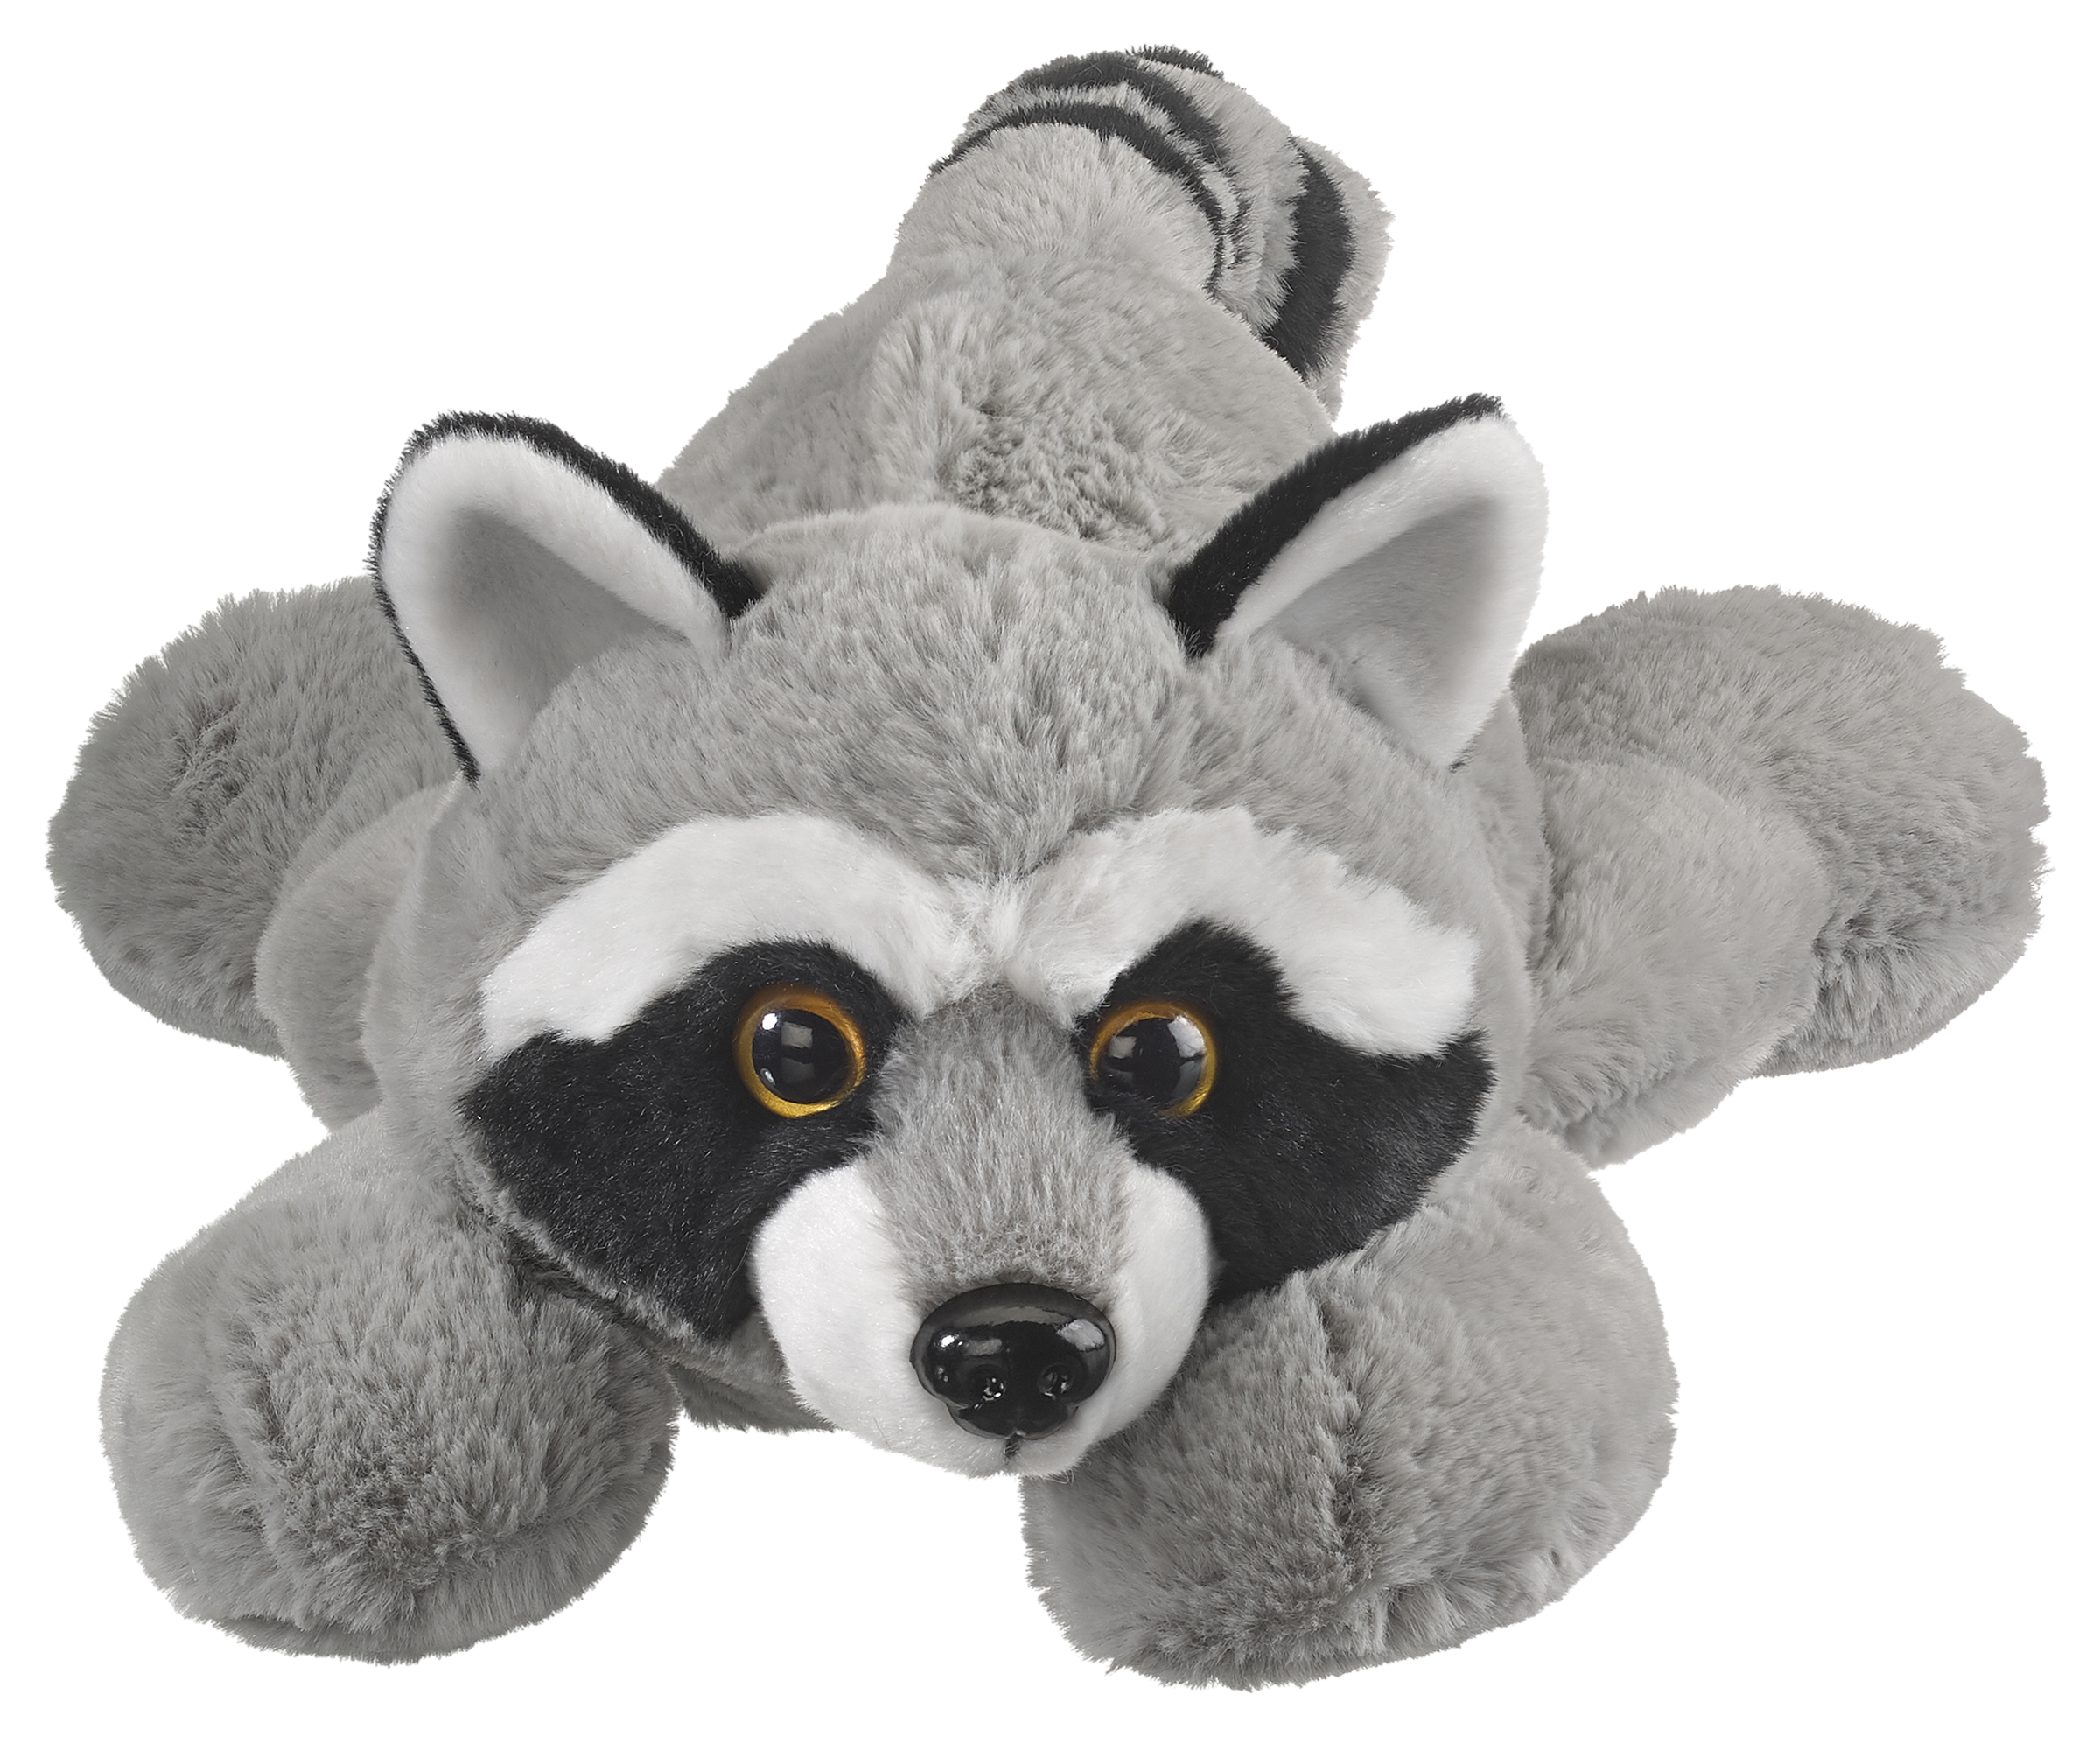 Raccoon Stuffed Animal, Shop Raccoon Plush Toys